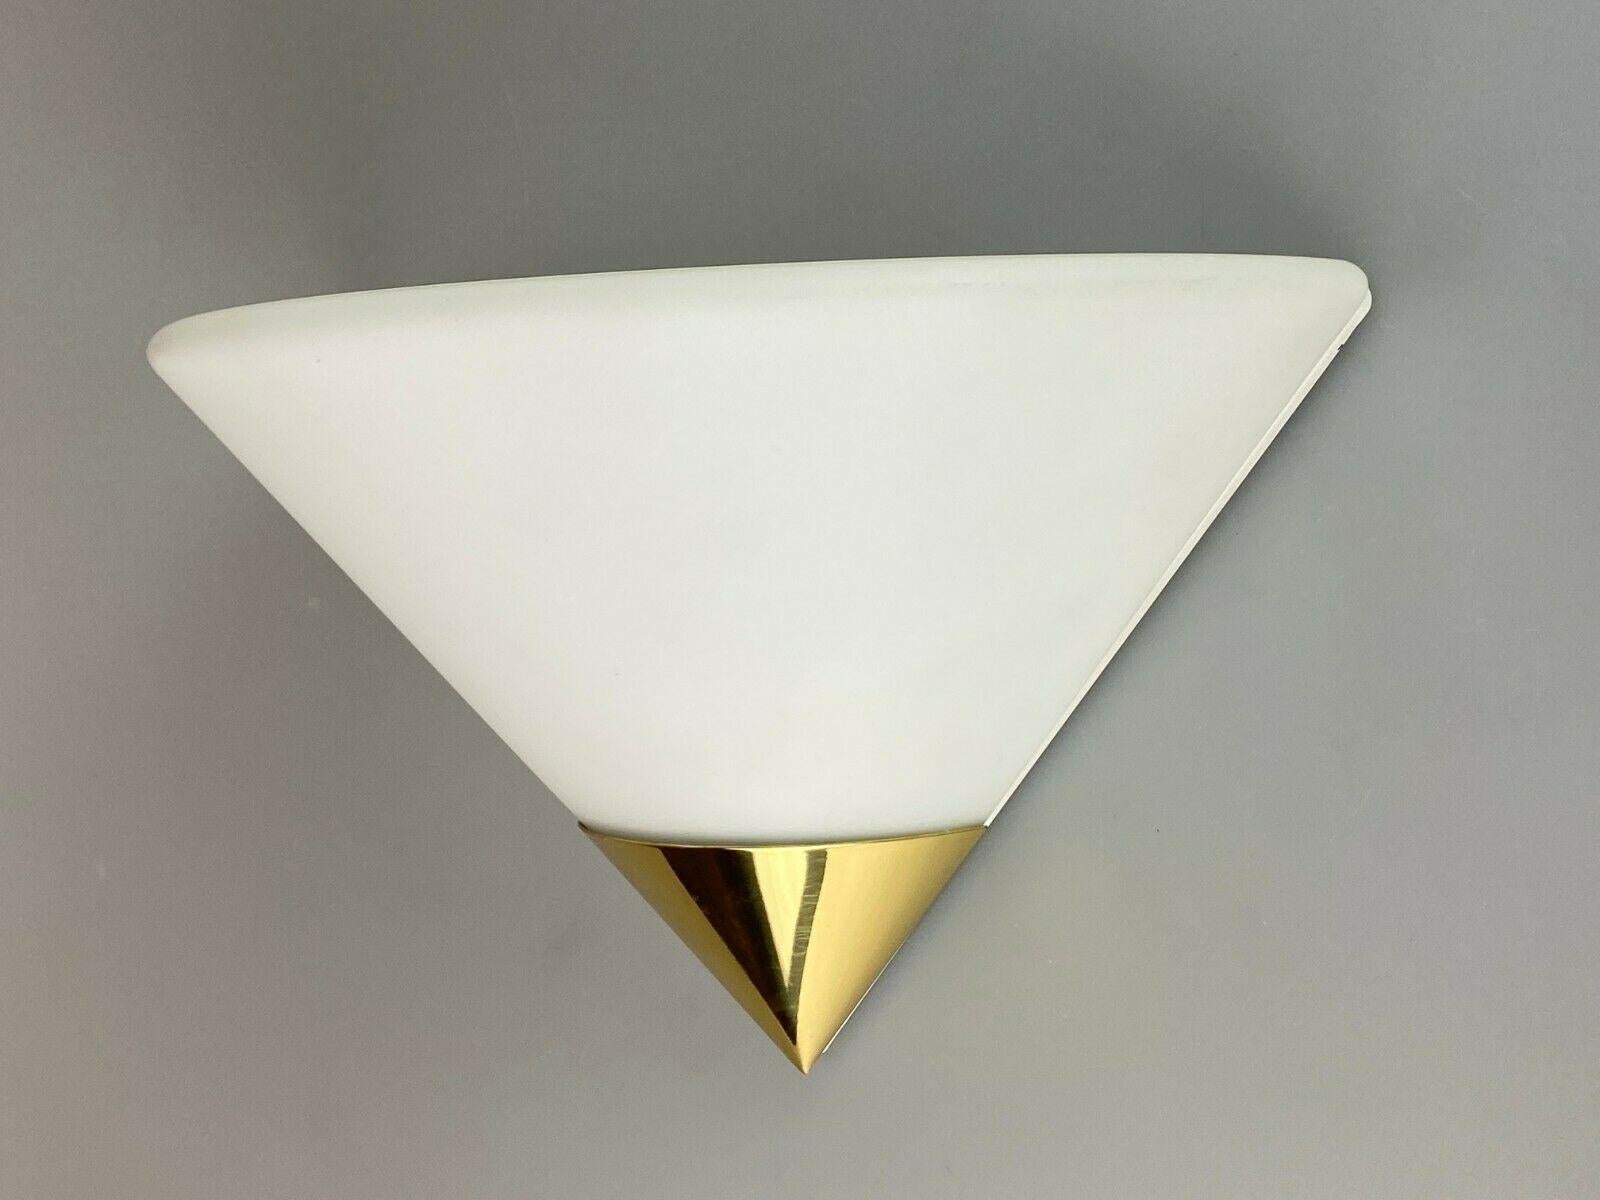 Metal 60s 70s Lamp Light Wall Lamp Limburg Plafoniere Space Age Design